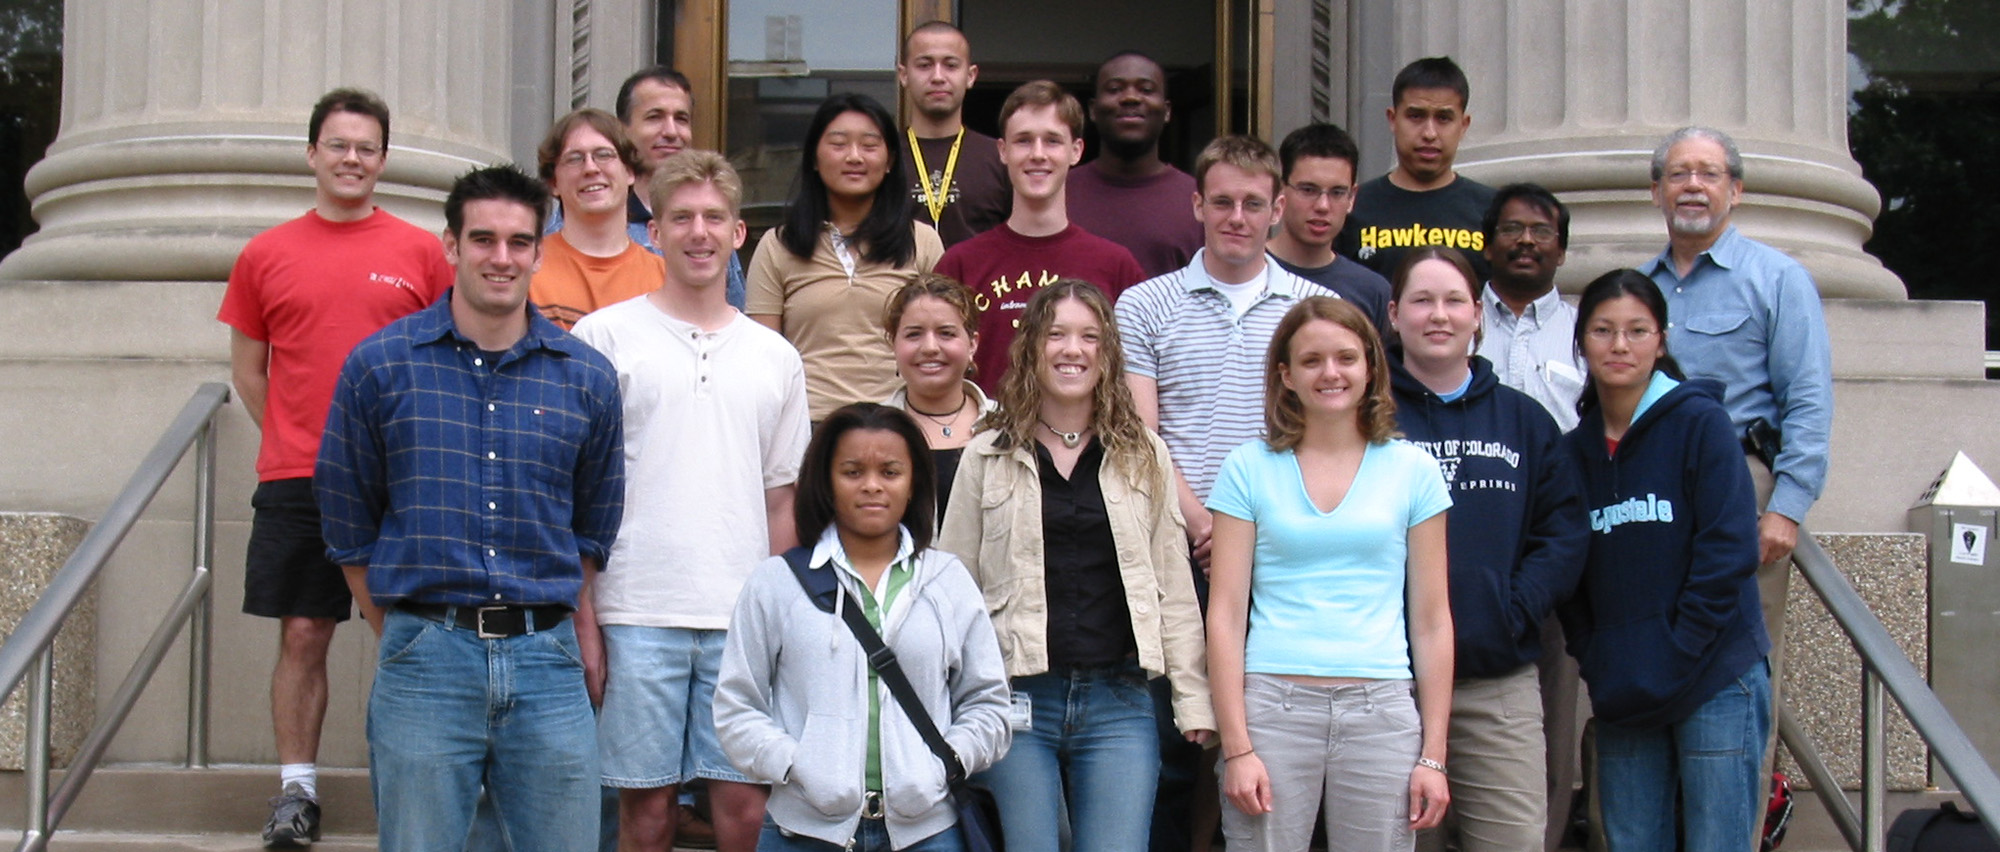 2004 Research Experience for Undergraduates Participants